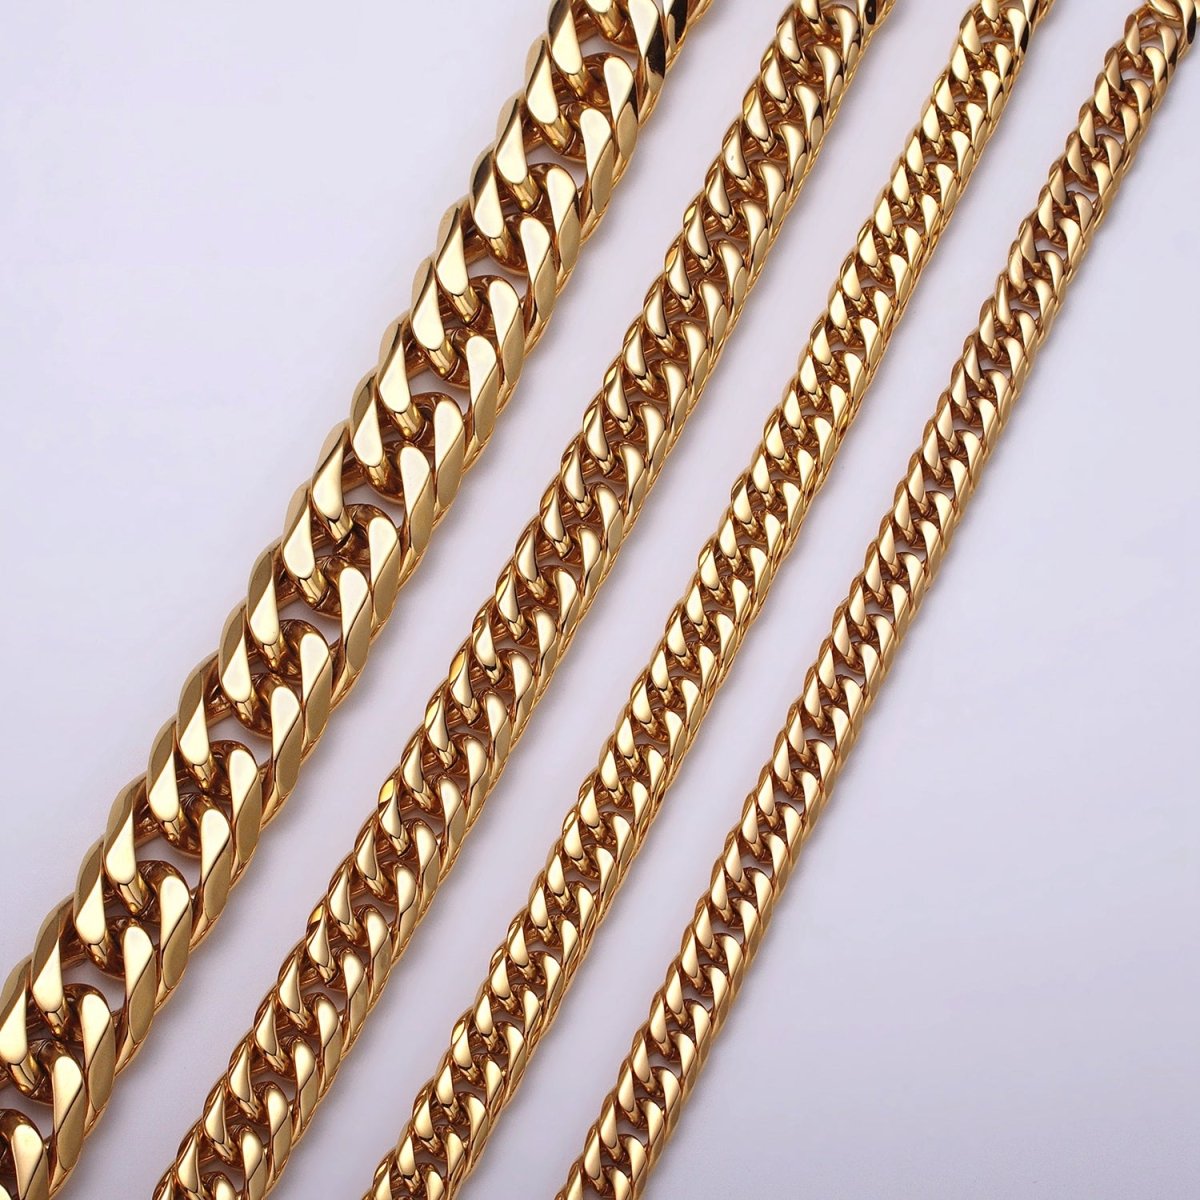 Chunky Gold Miami Cuban Curb Chain Bracelet, 8mm 9mm 11mm Stainless Steel Chain Men Bracelet | WA-1645 WA-1646 WA-1647 Clearance Pricing - DLUXCA